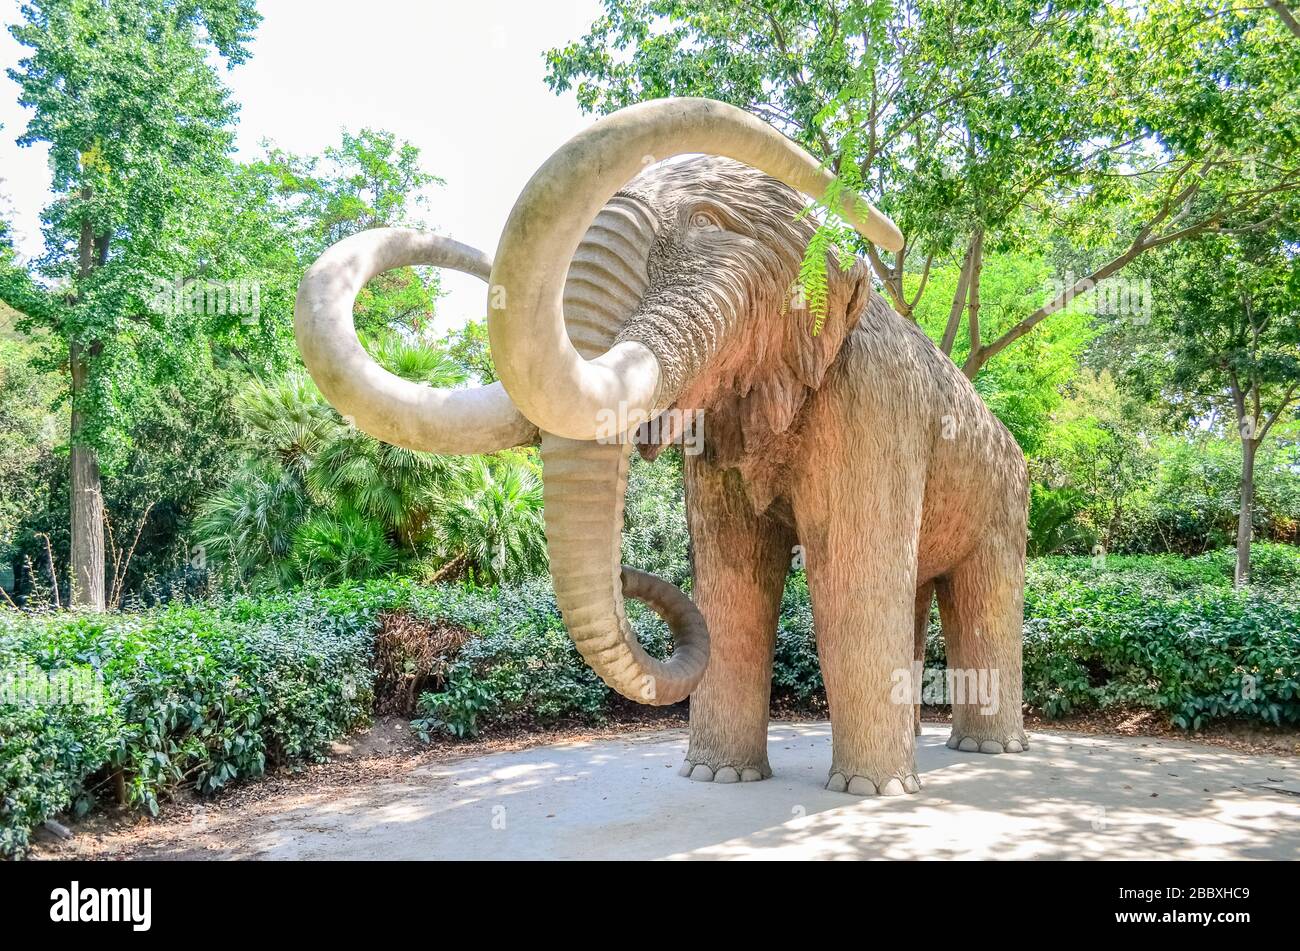 Sculpture of a mammoth (Mamut) in Parc de la Ciutadella (Citadel Park). Barcelona, Catalonia, Spain Stock Photo